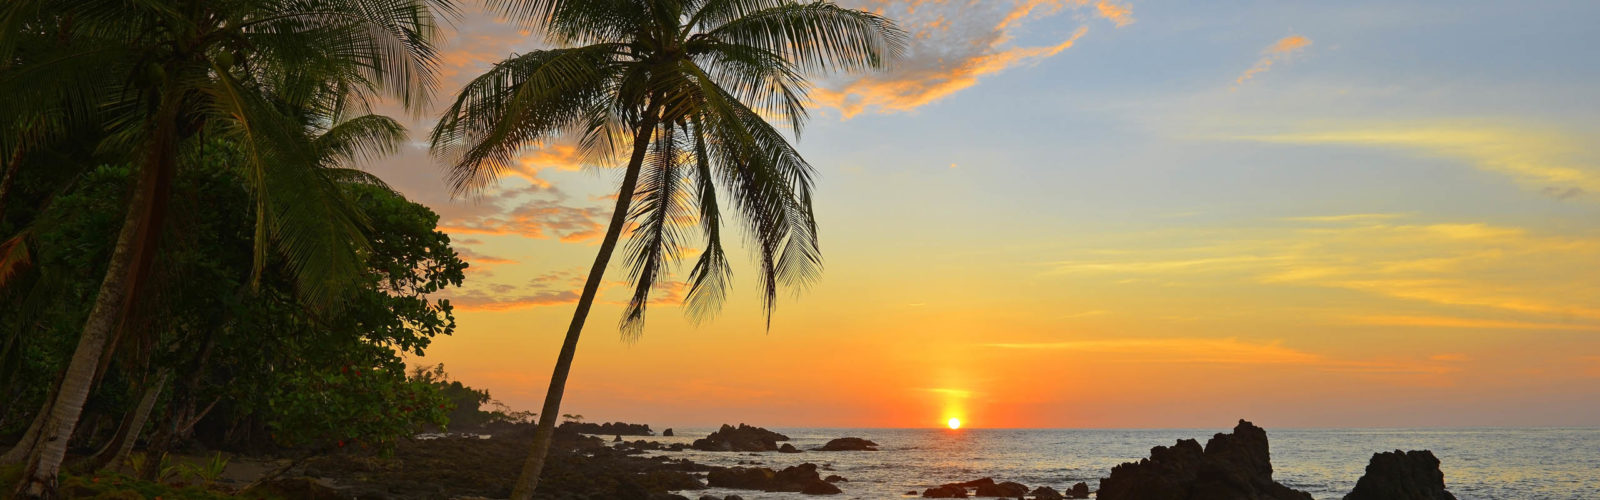 sunset-tortuguero-costa-rica